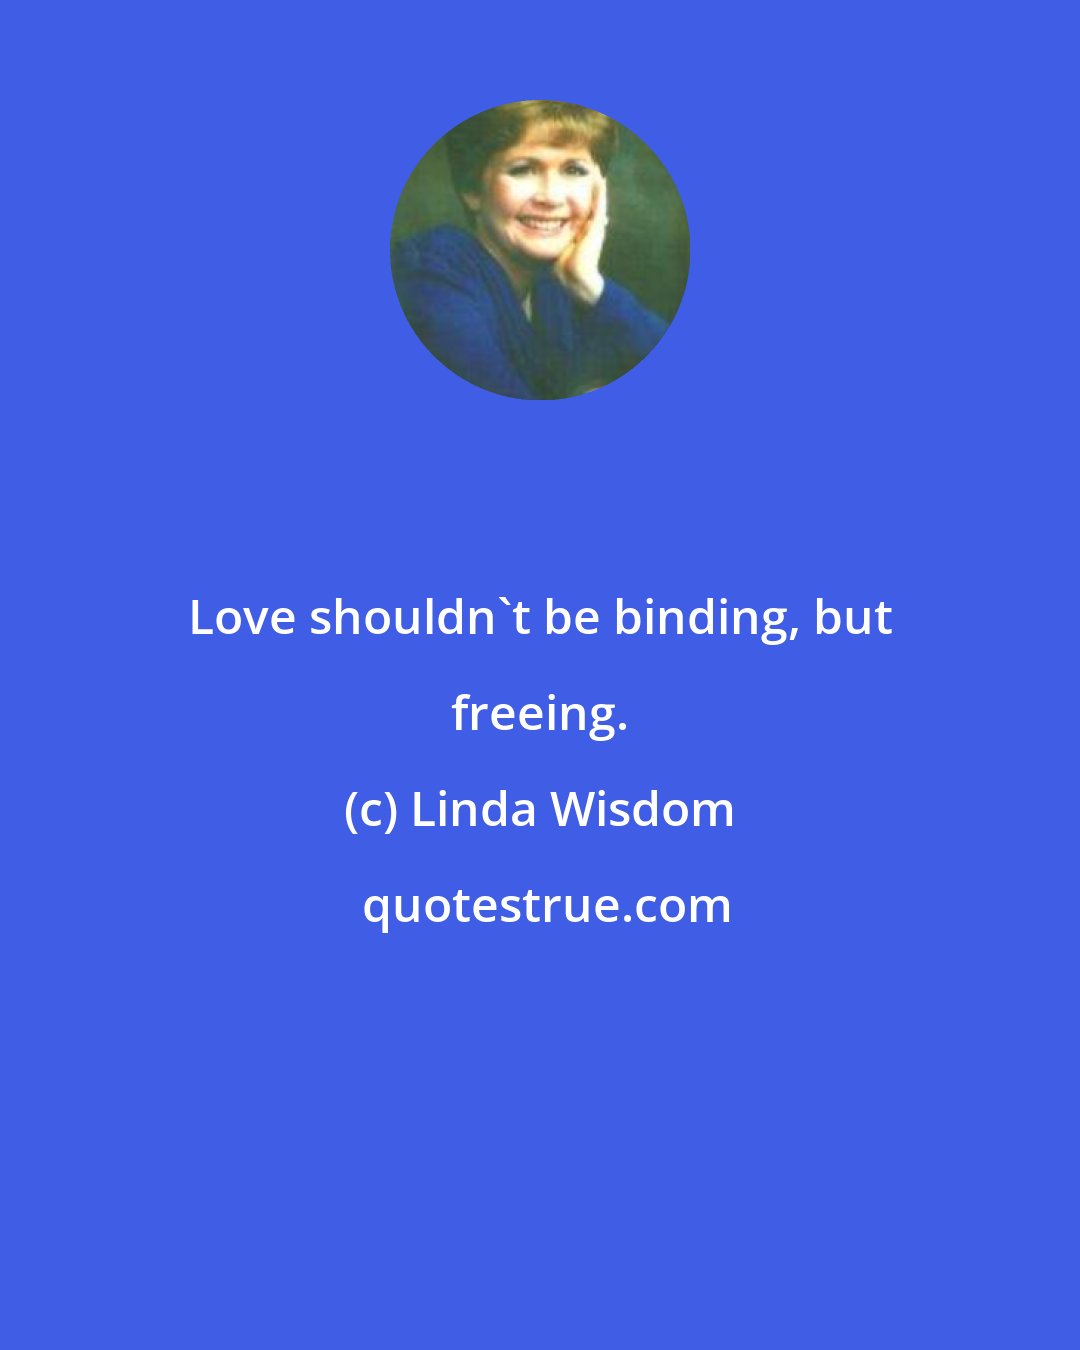 Linda Wisdom: Love shouldn't be binding, but freeing.